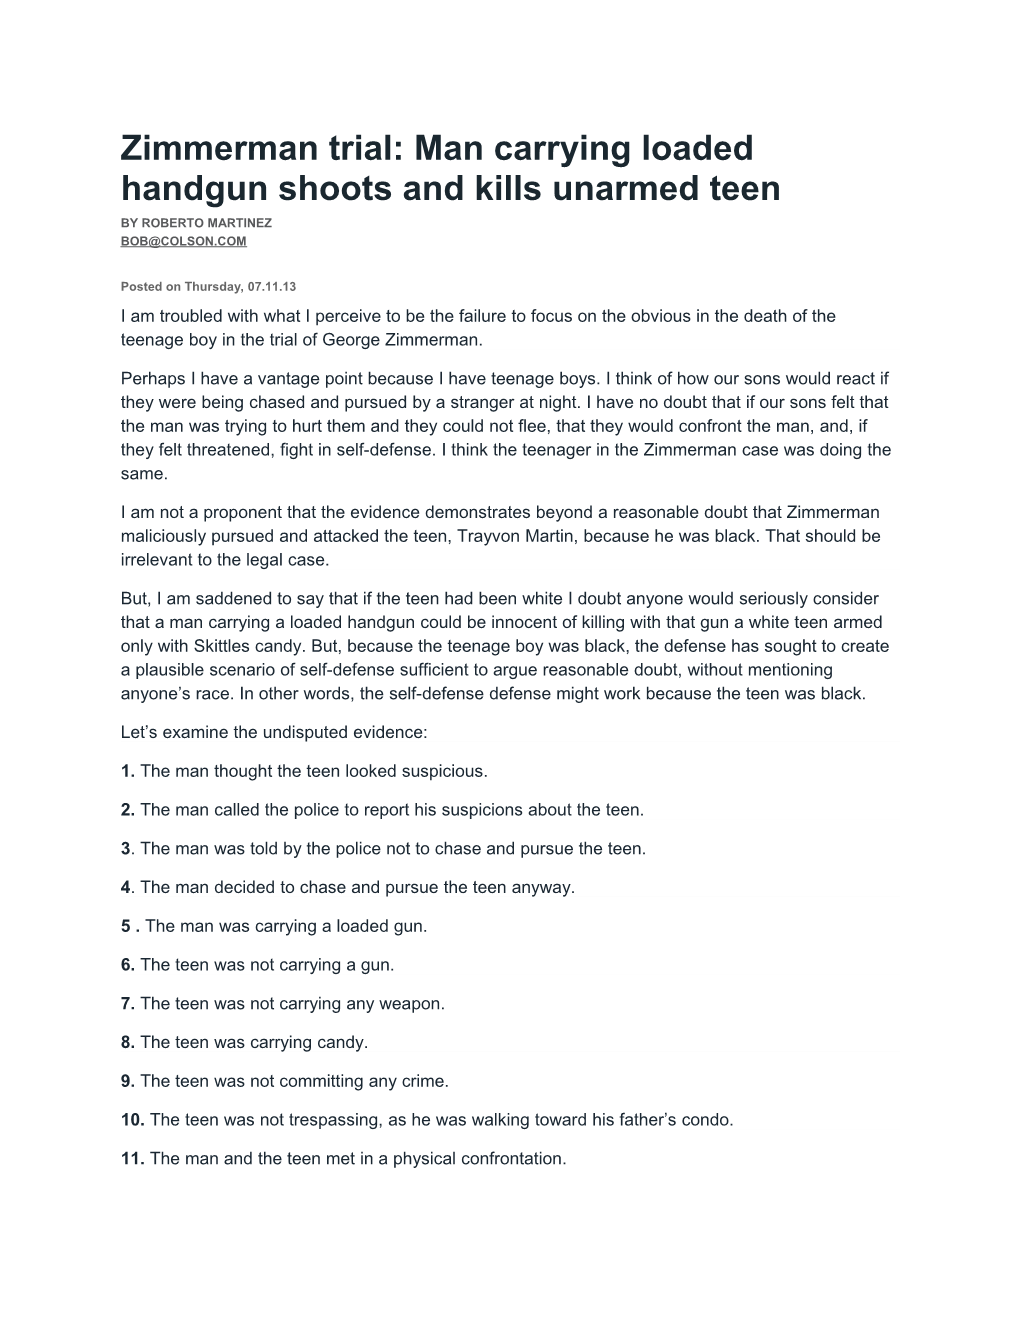 Zimmerman Trial: Man Carrying Loaded Handgun Shoots and Kills Unarmed Teen